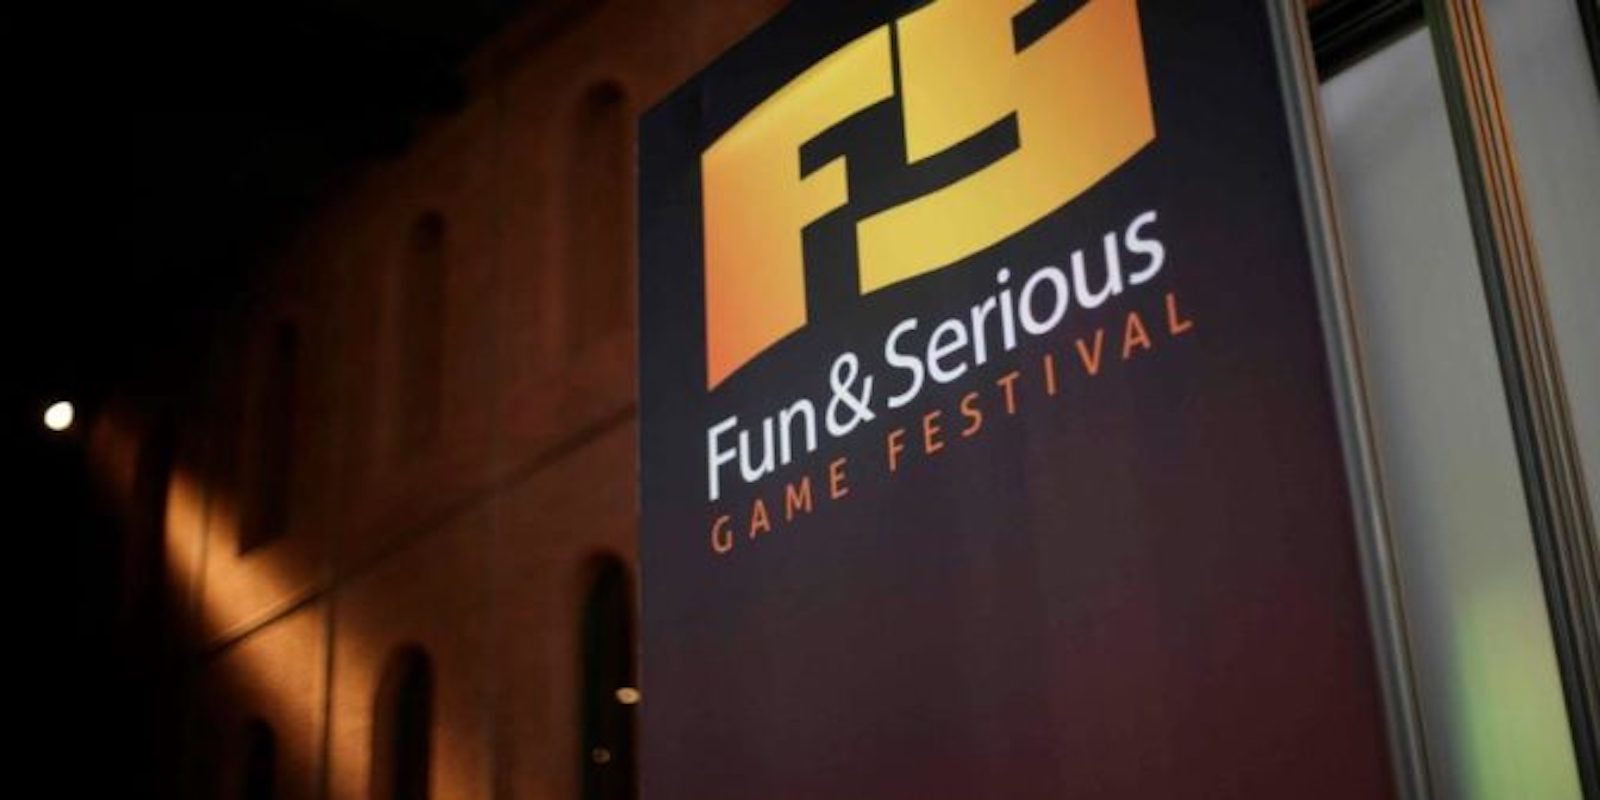 Fechado el Fun & Serious Game Festival 2018